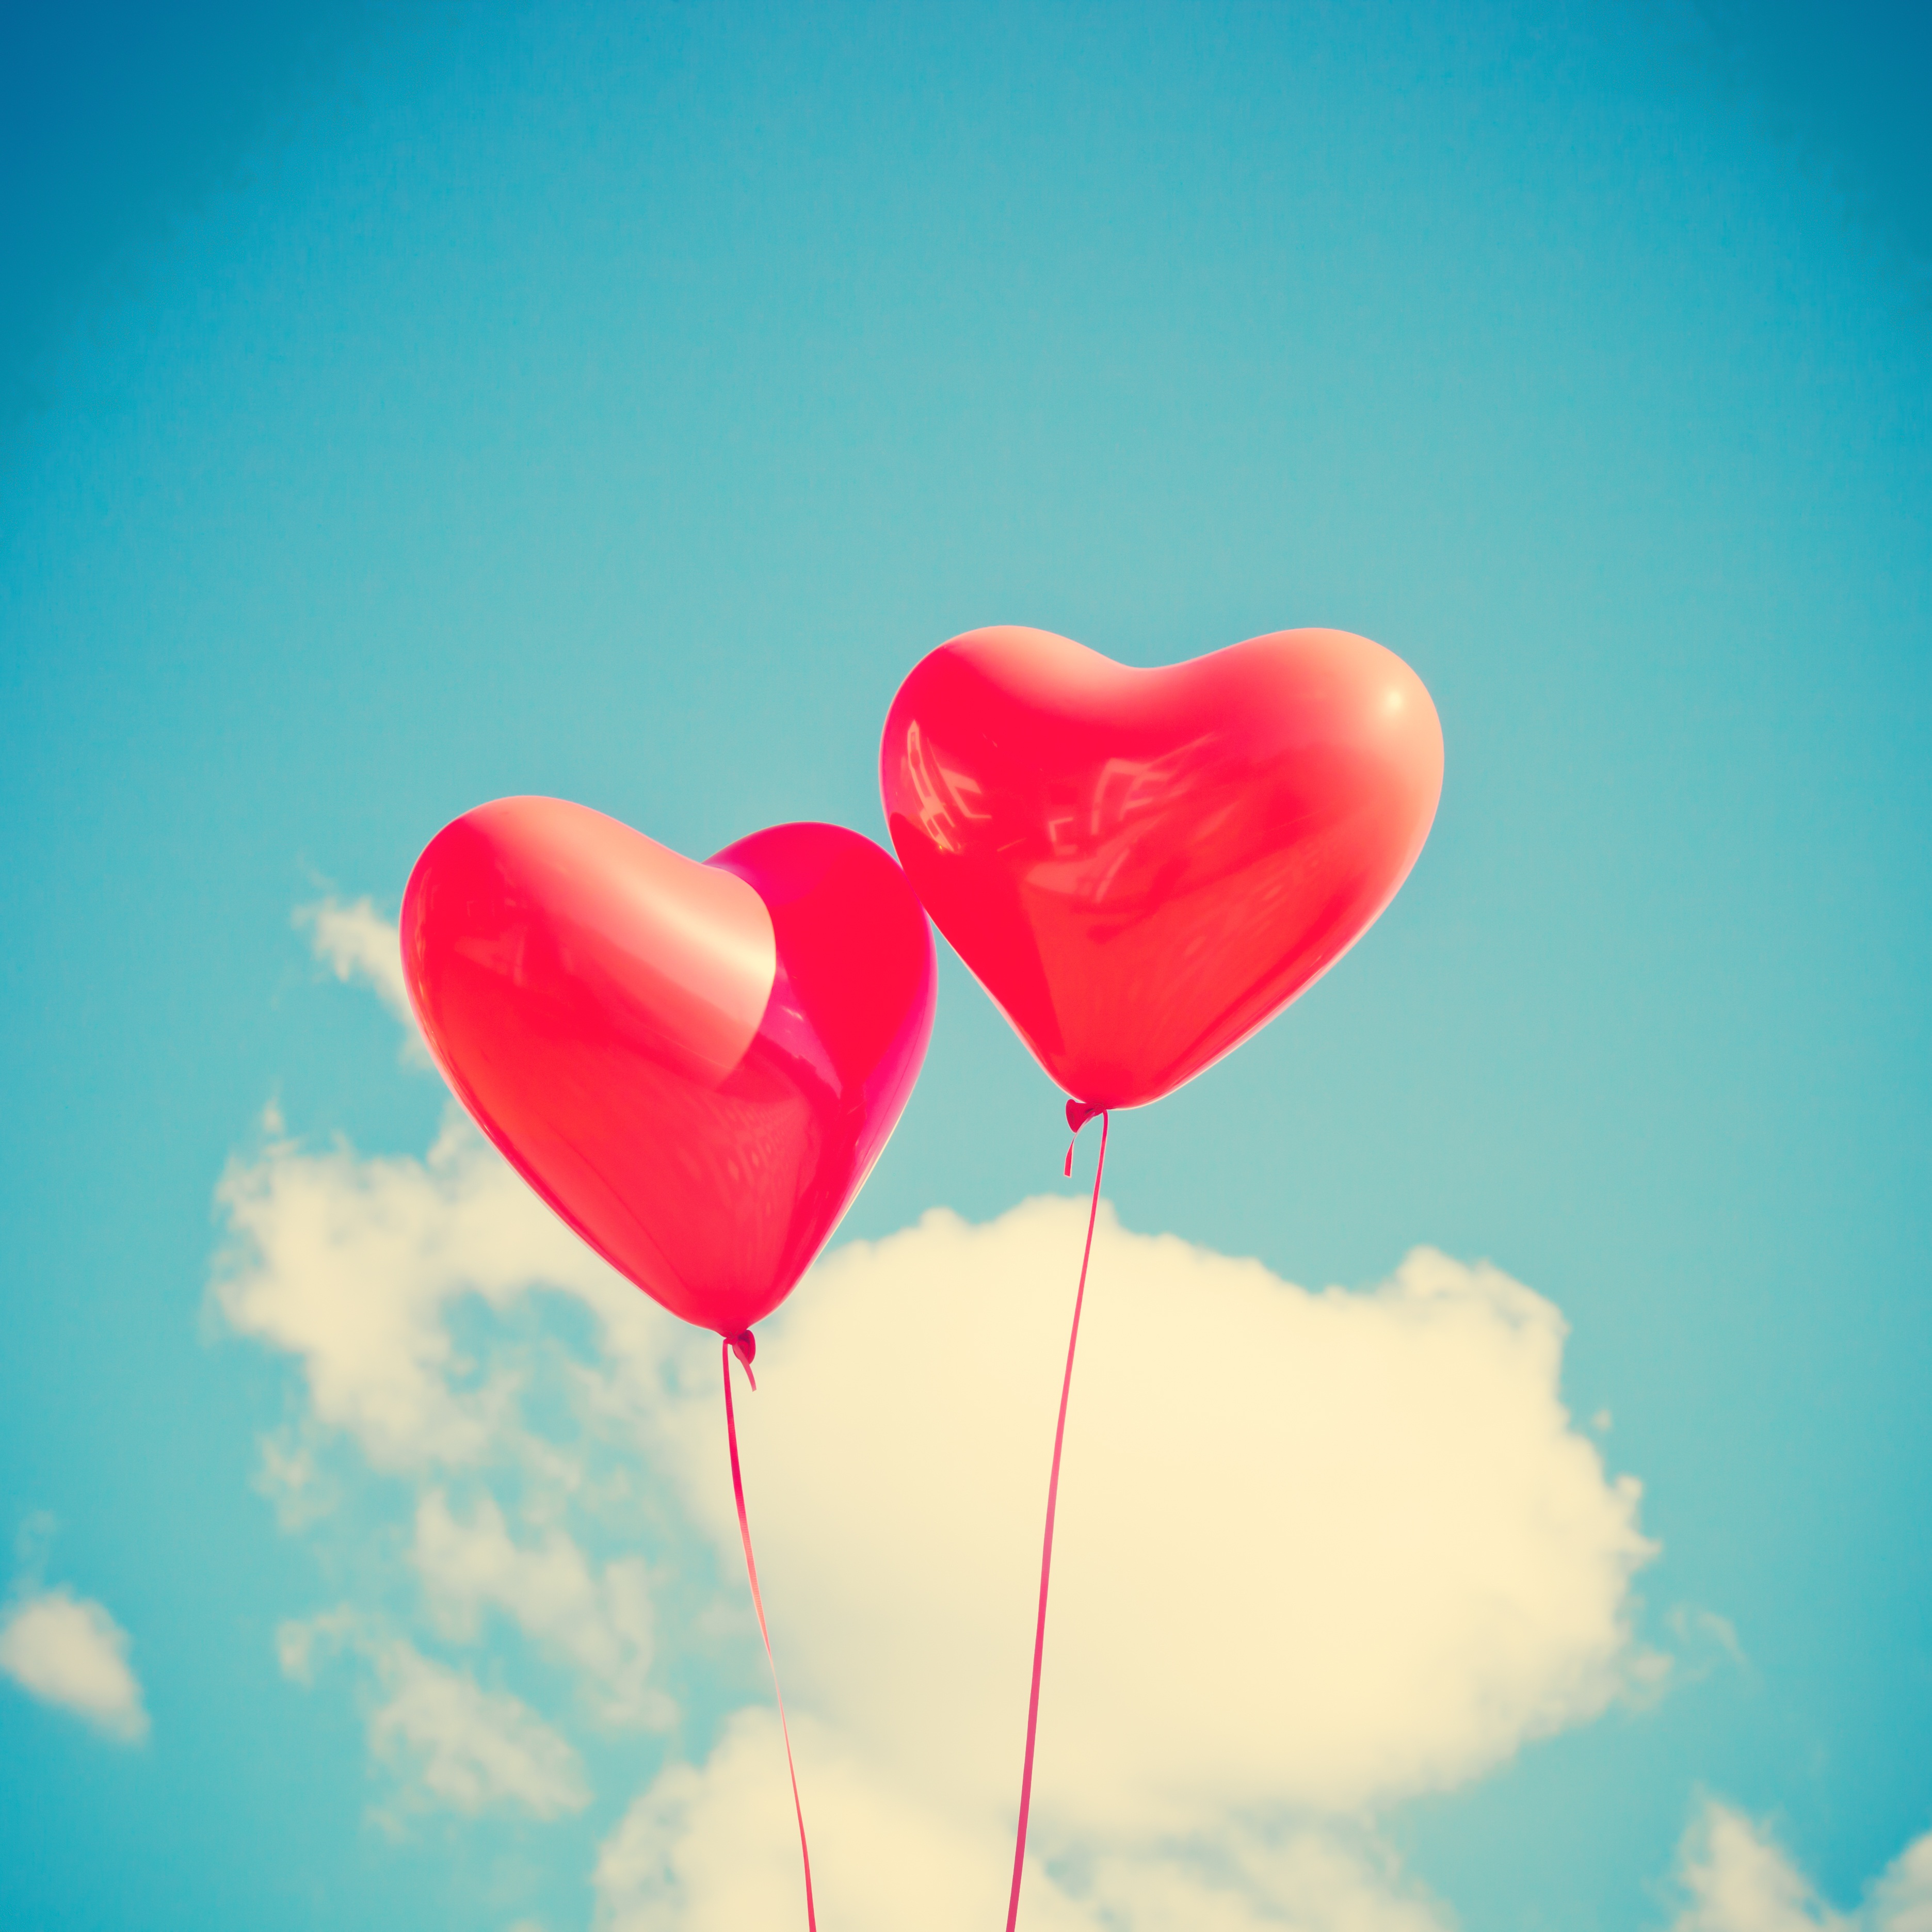 heart, balloons, love, sky, ease 1080p